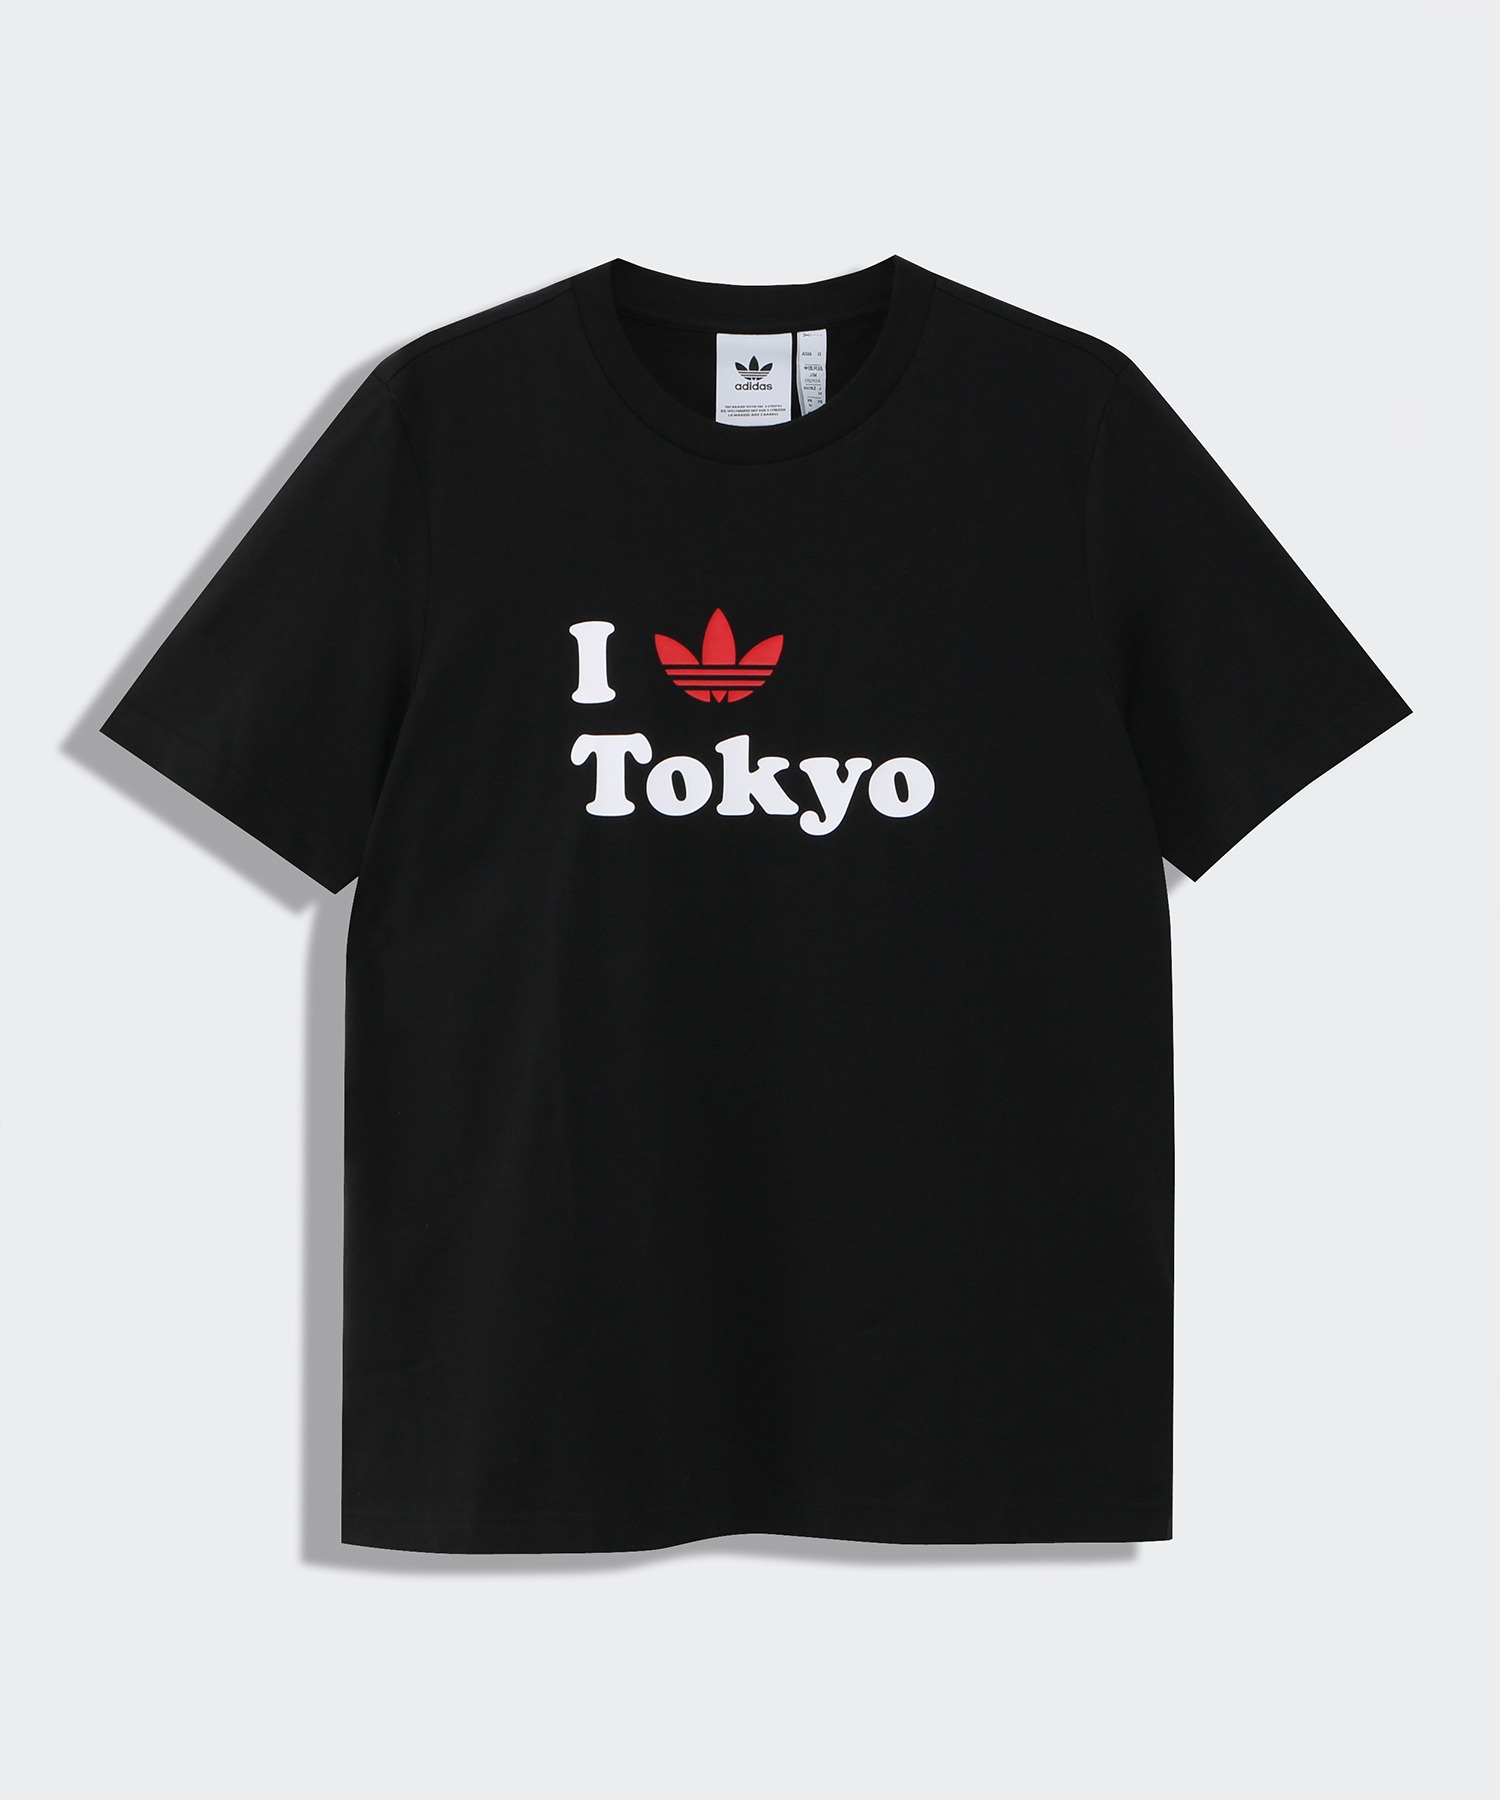 MFT 1 Tシャツ TEE I adidas アディダス 【メーカー公式ショップ】 定番 TREFOIL